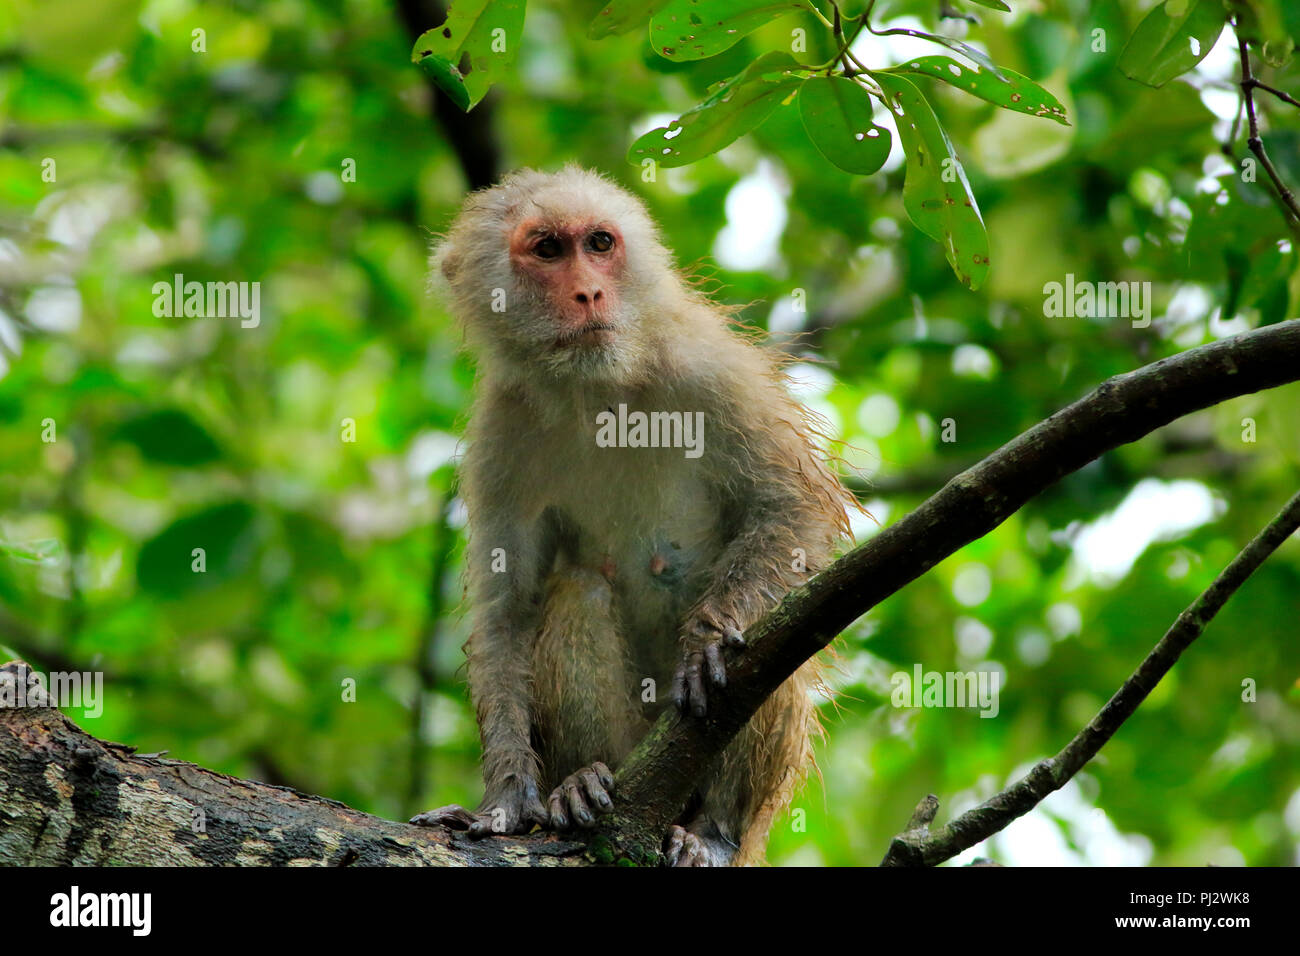 Bangladesh monkey hi-res stock photography and images - Alamy